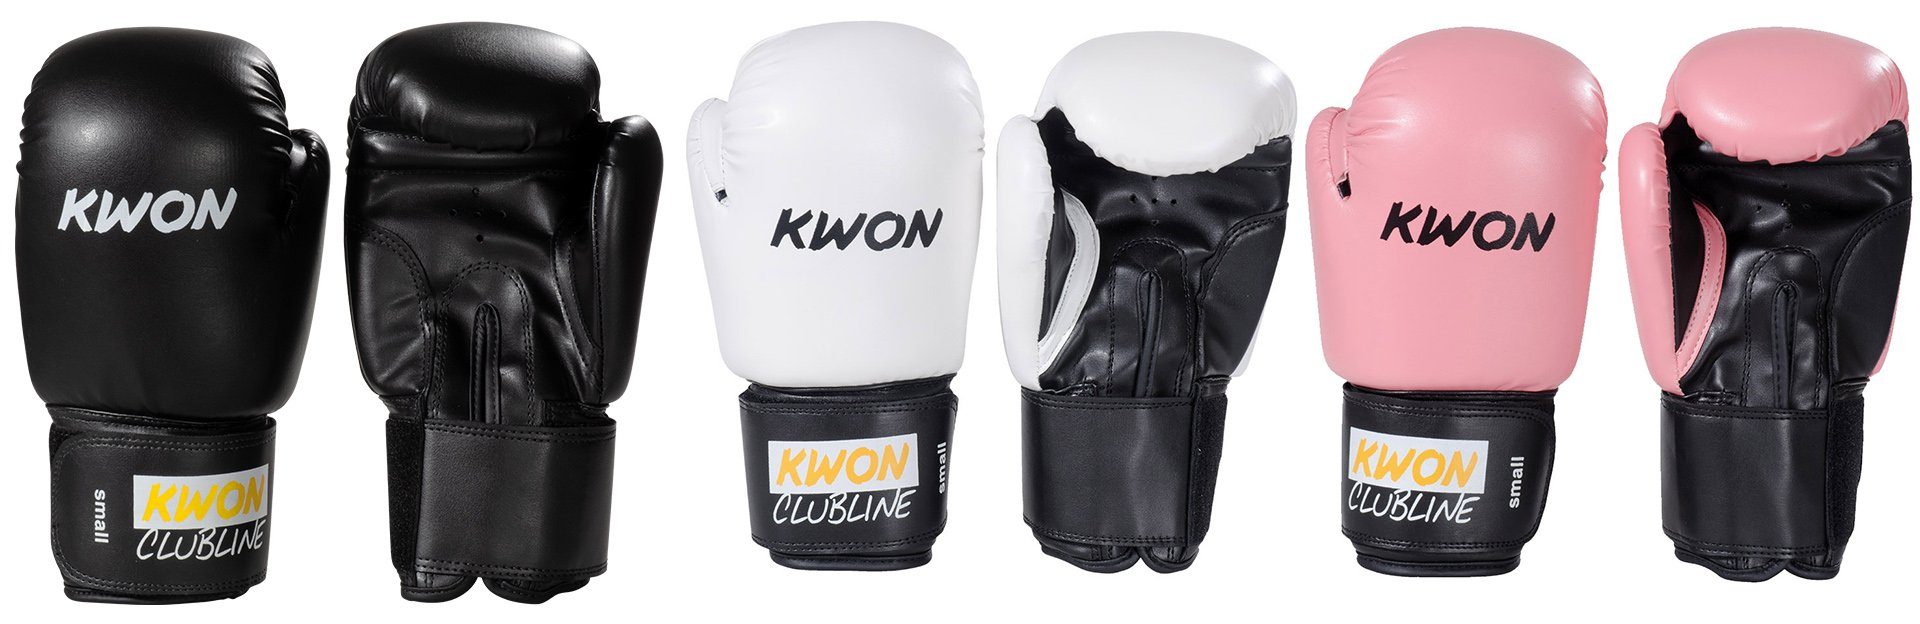 Thai, Line Kickboxen, Kickboxen Boxhandschuhe 8 Unzen Hand small Boxen Box-Handschuhe KWON pink Club Boxen, Muay (Profi, Serie), MMA Pointer